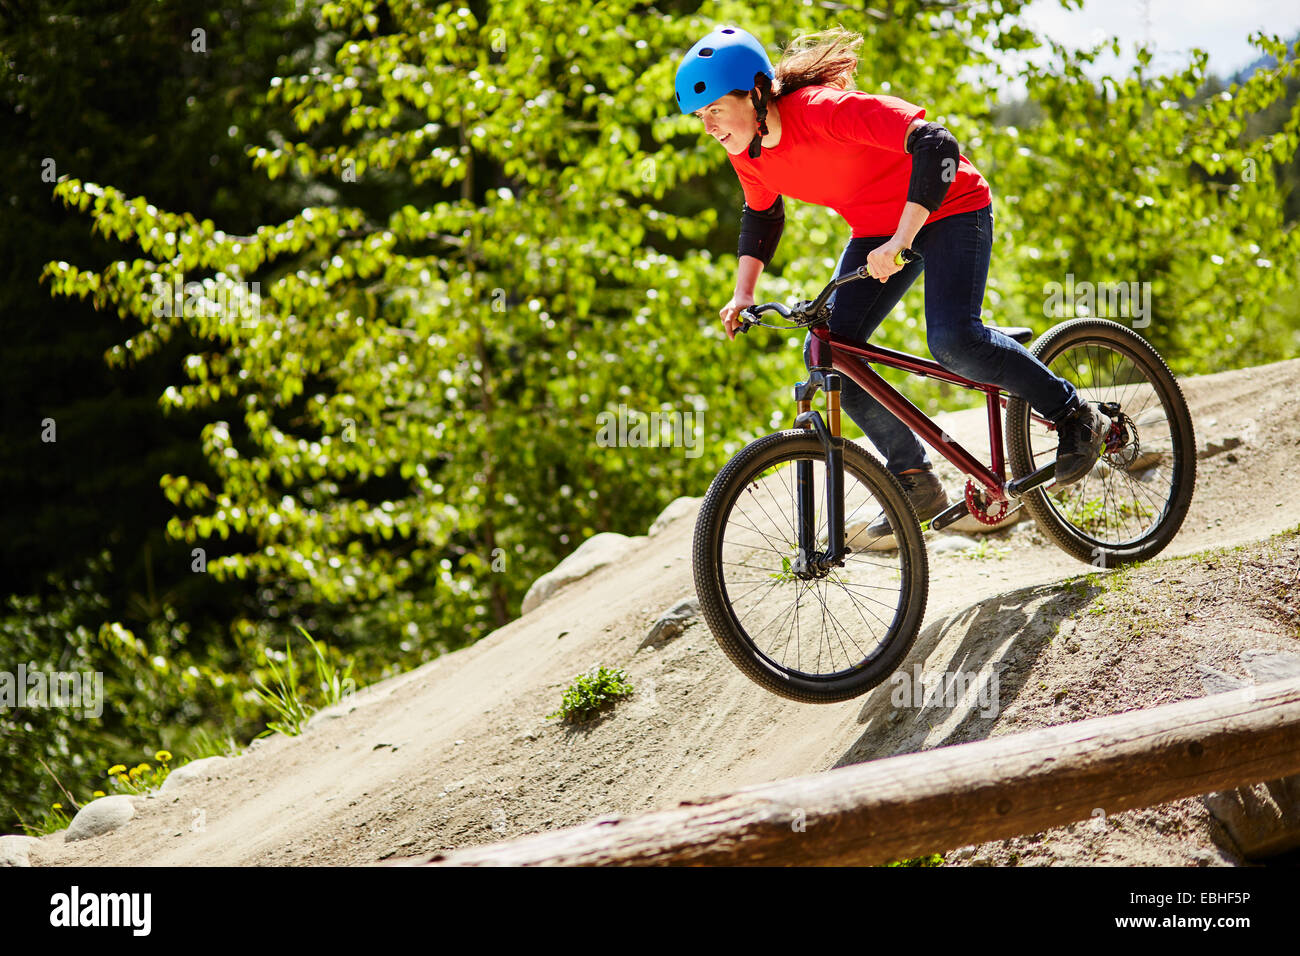 Young female bmx biker speeding down rocks in forest Stock Photo